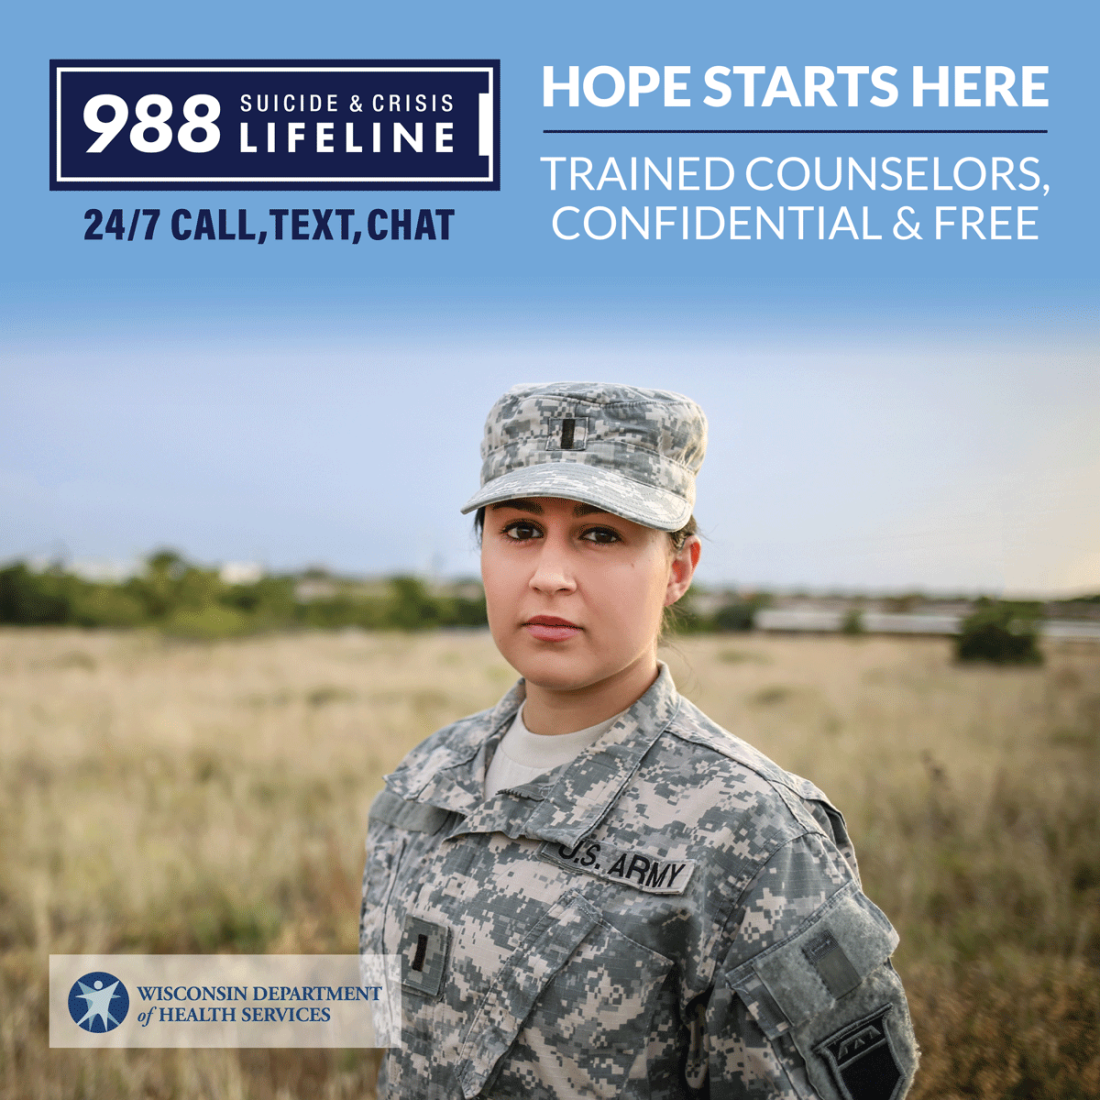 Army veteran - Hope starts here - 988 Suicide & Crisis Lifeline